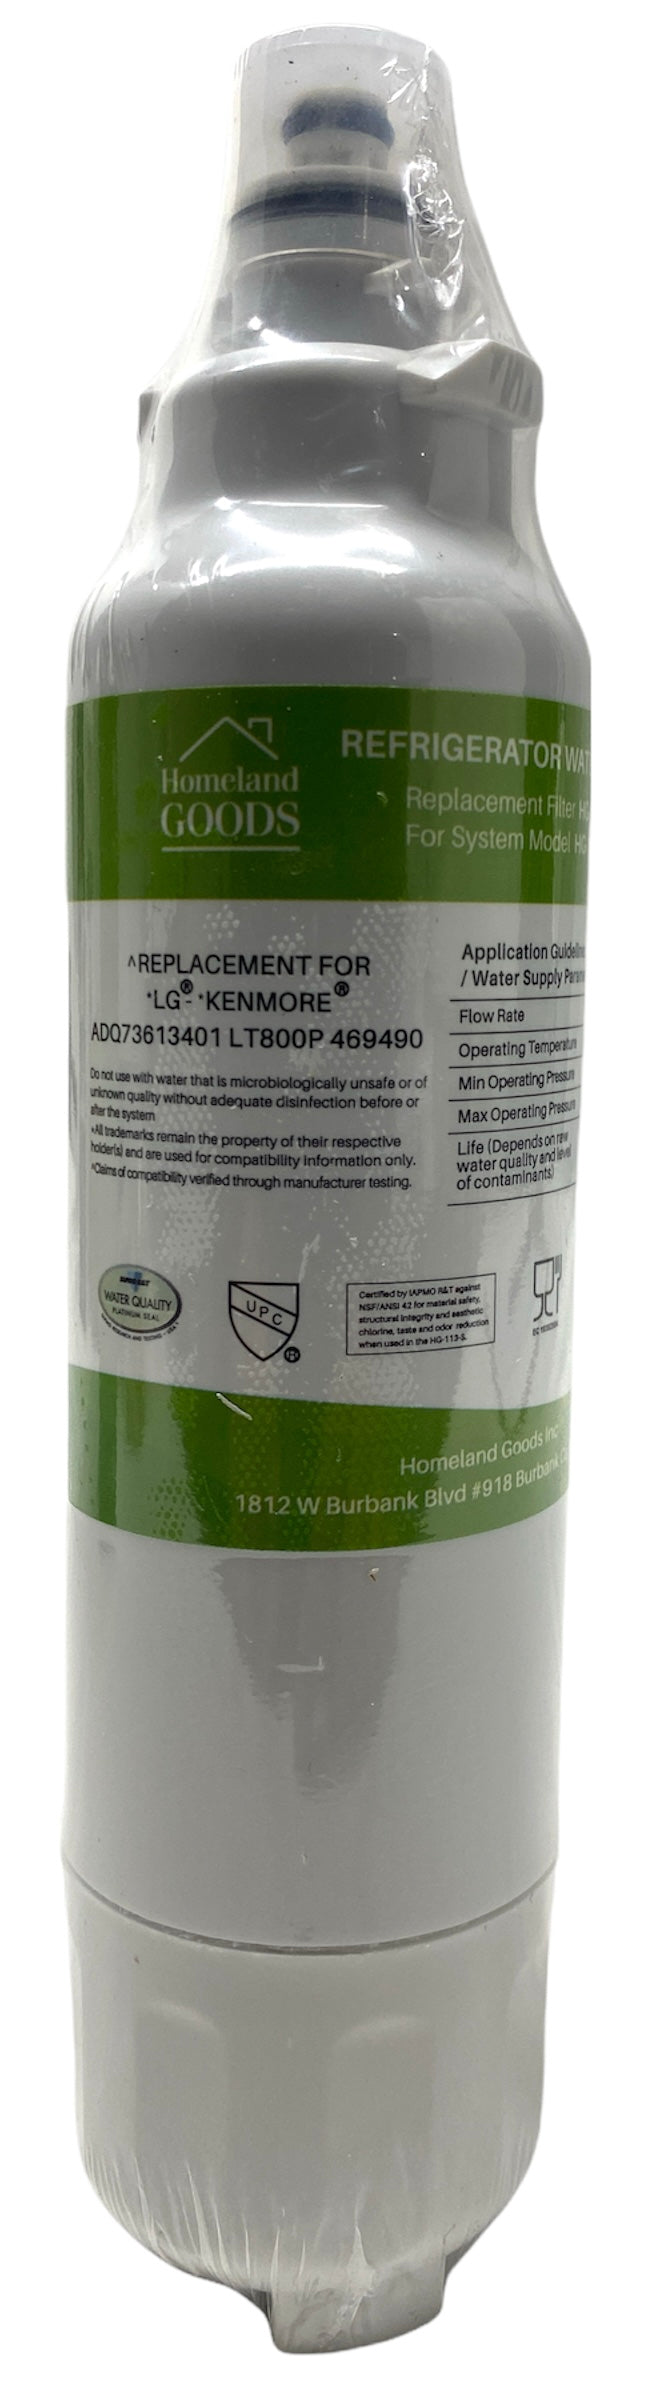 RWF3500A Refrigerator Water Filter IAPMO Certified Replacement for 46-9490, 800P, R-9490, RWF3500A Refrigerator Water Filter